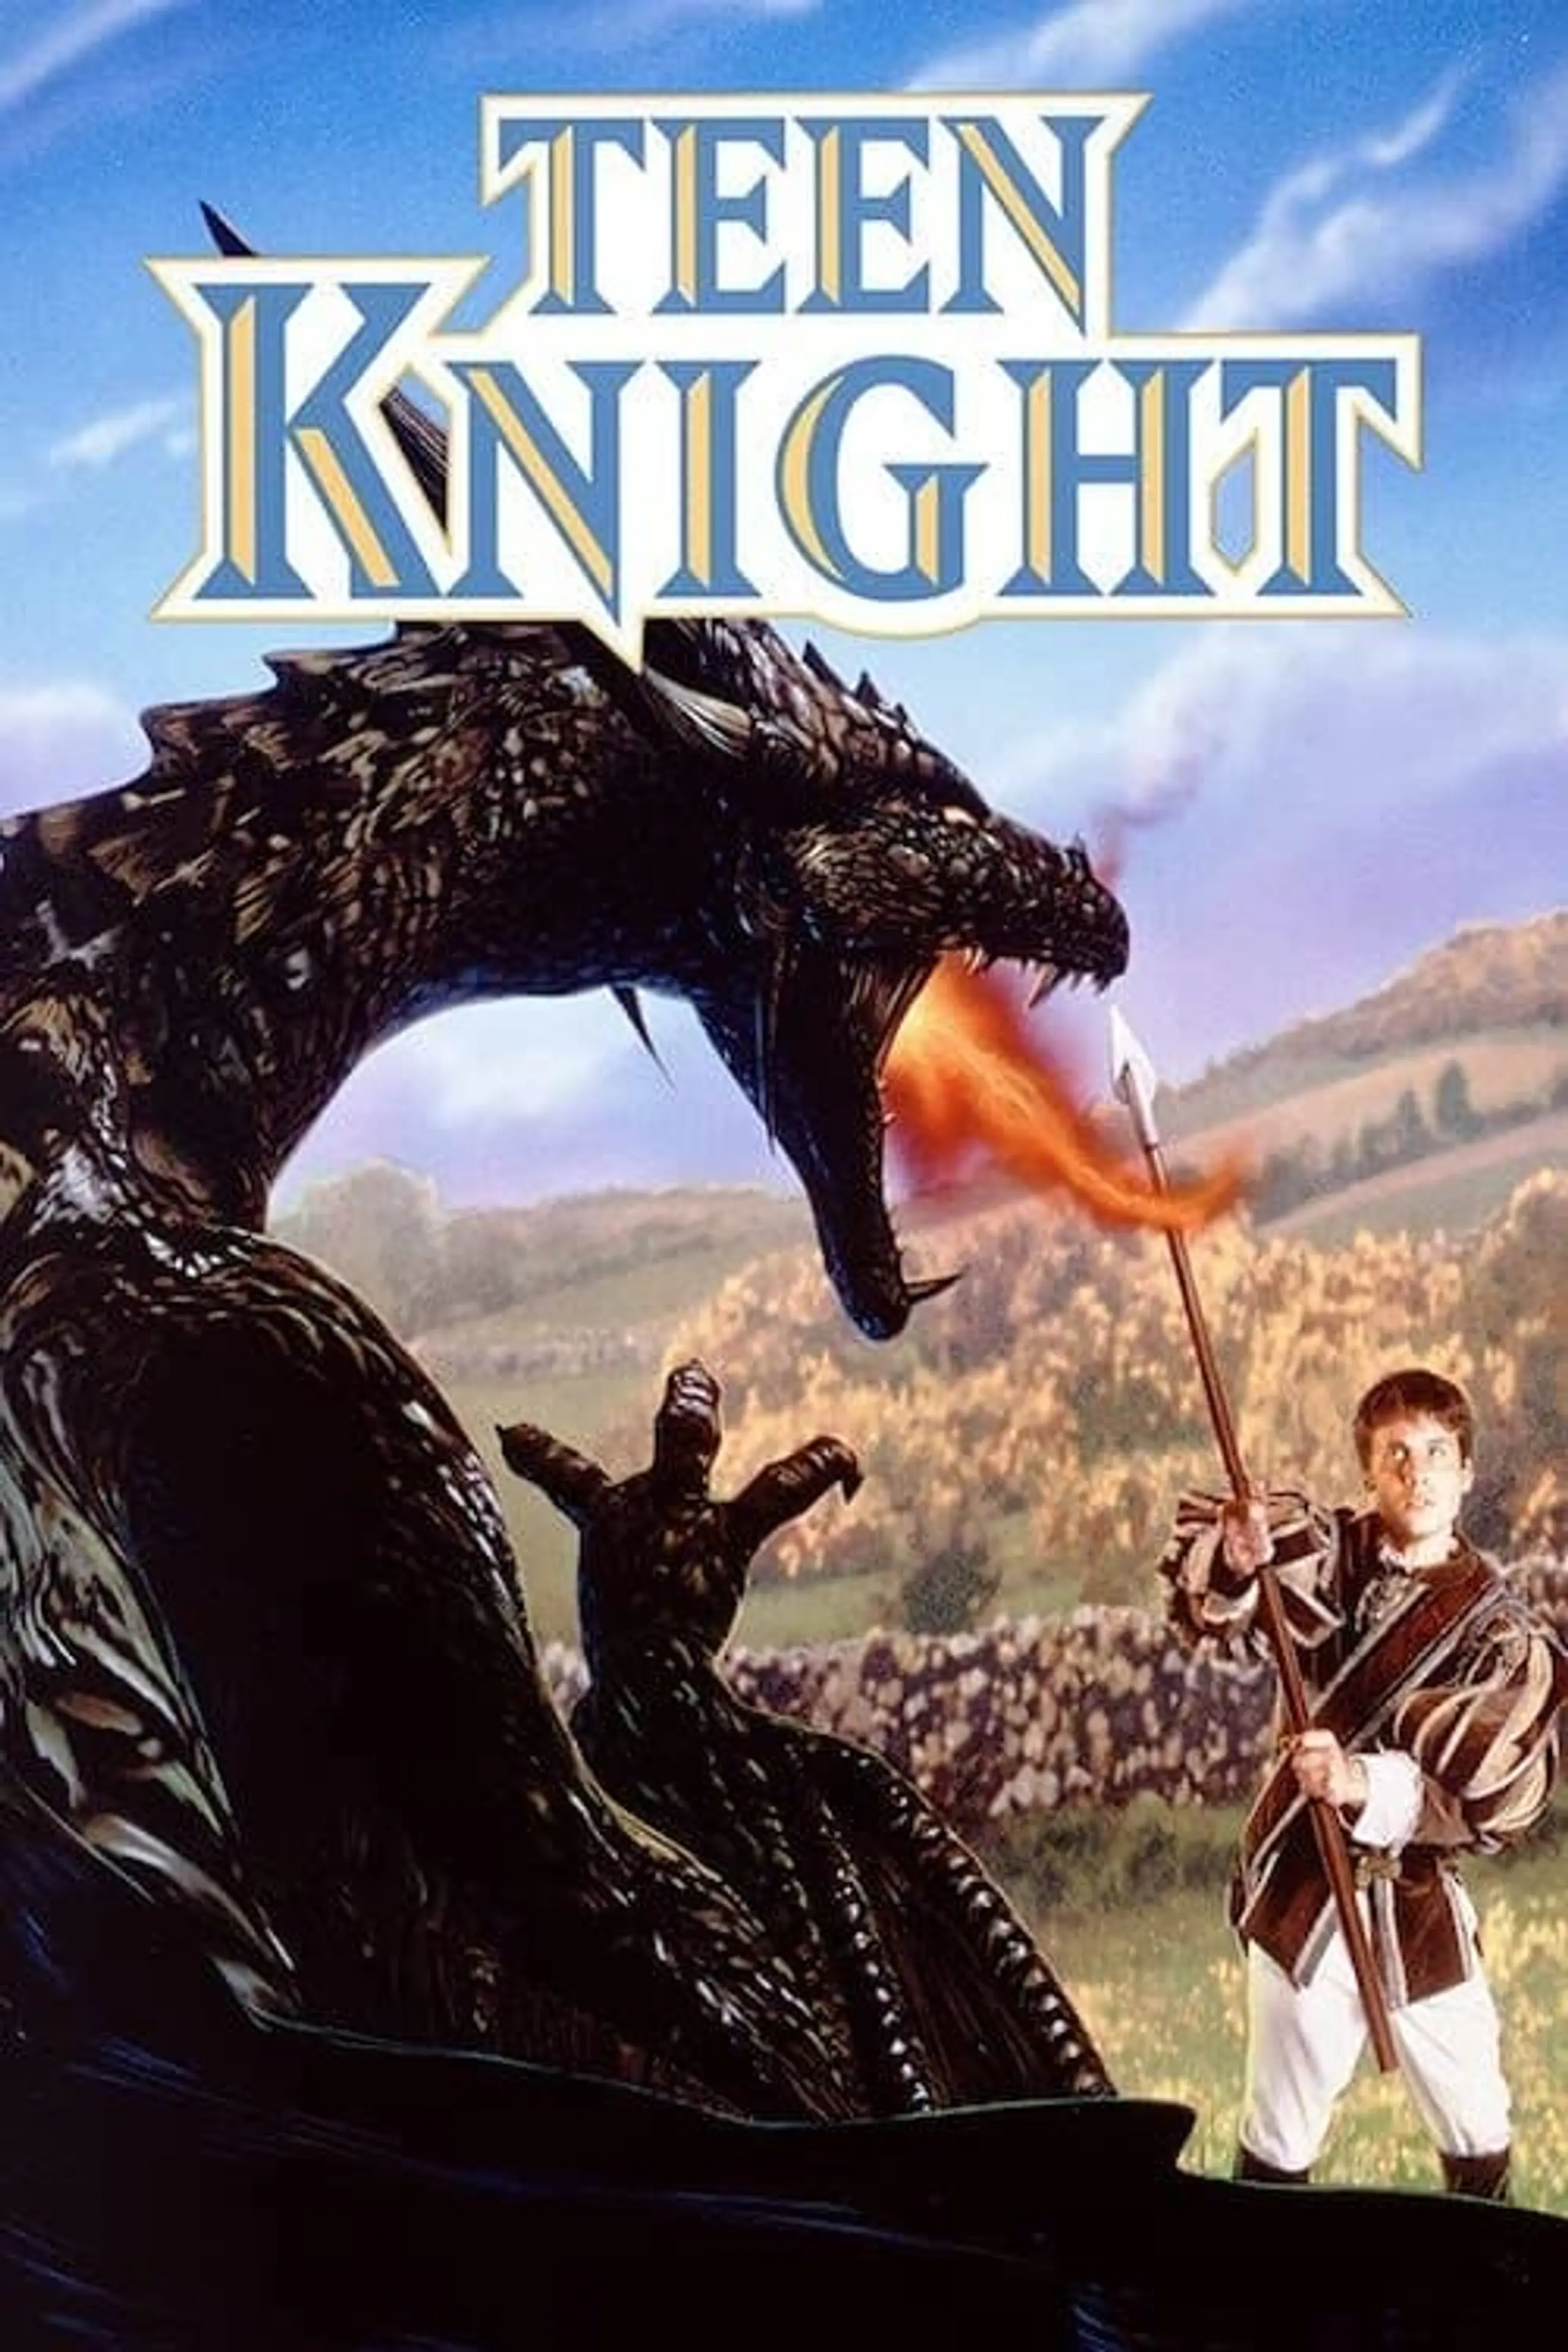 Teen Knight – Zurück ins Mittelalter